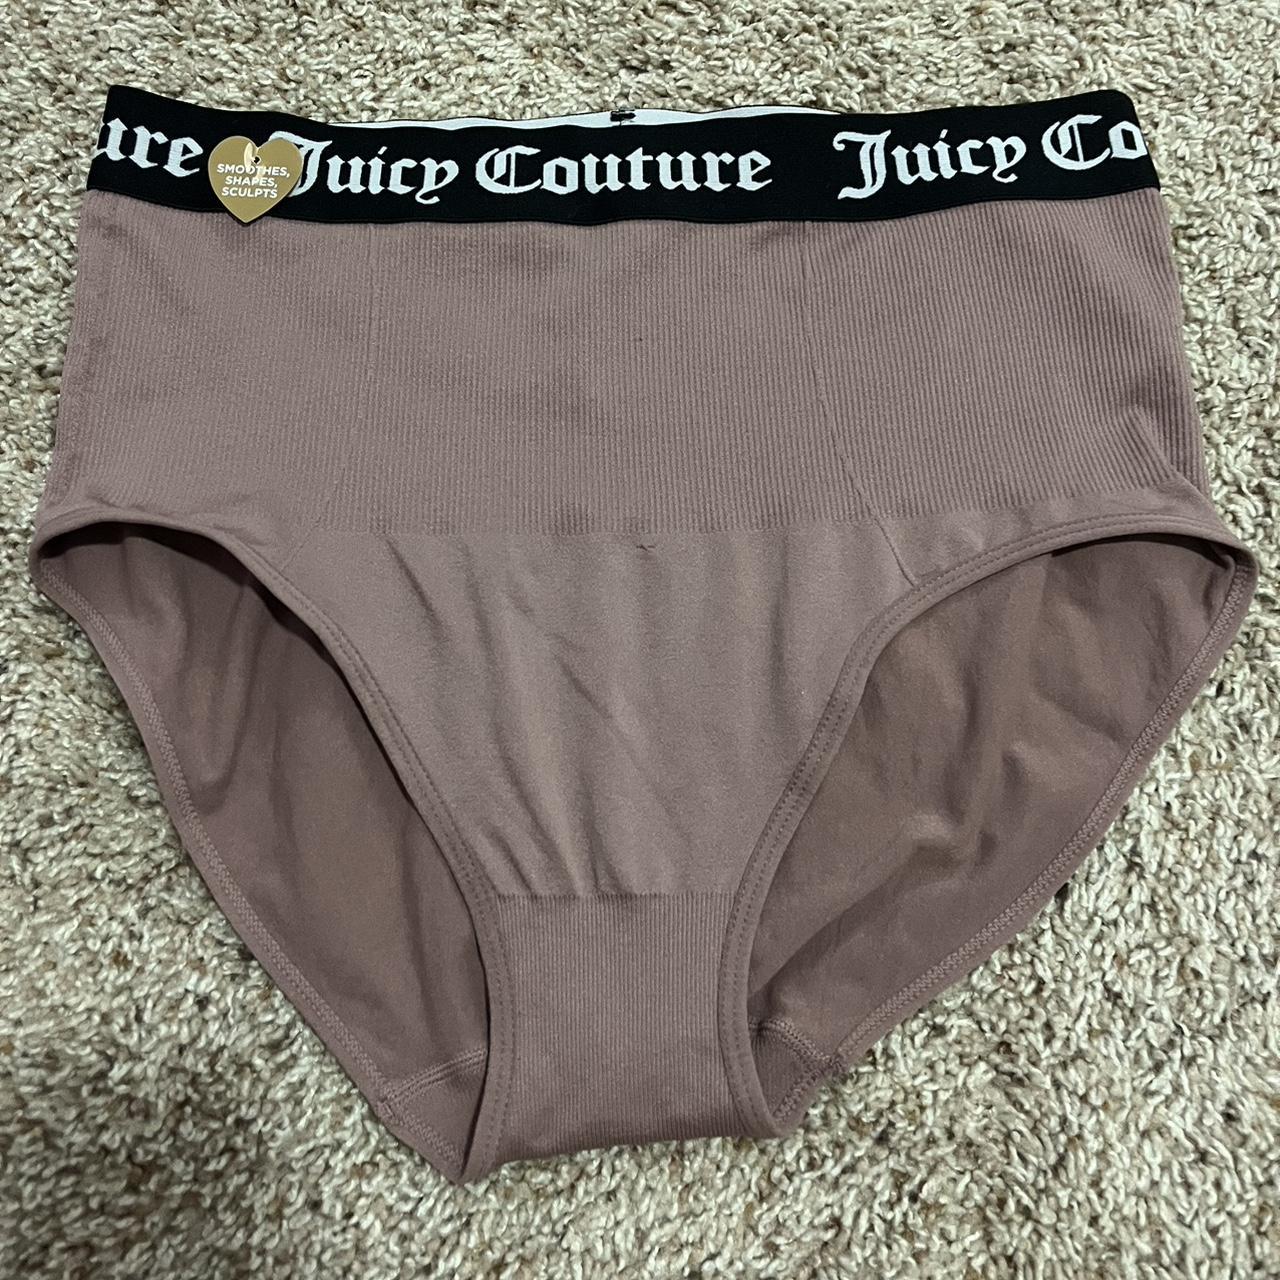 Juicy Couture Panties for Women